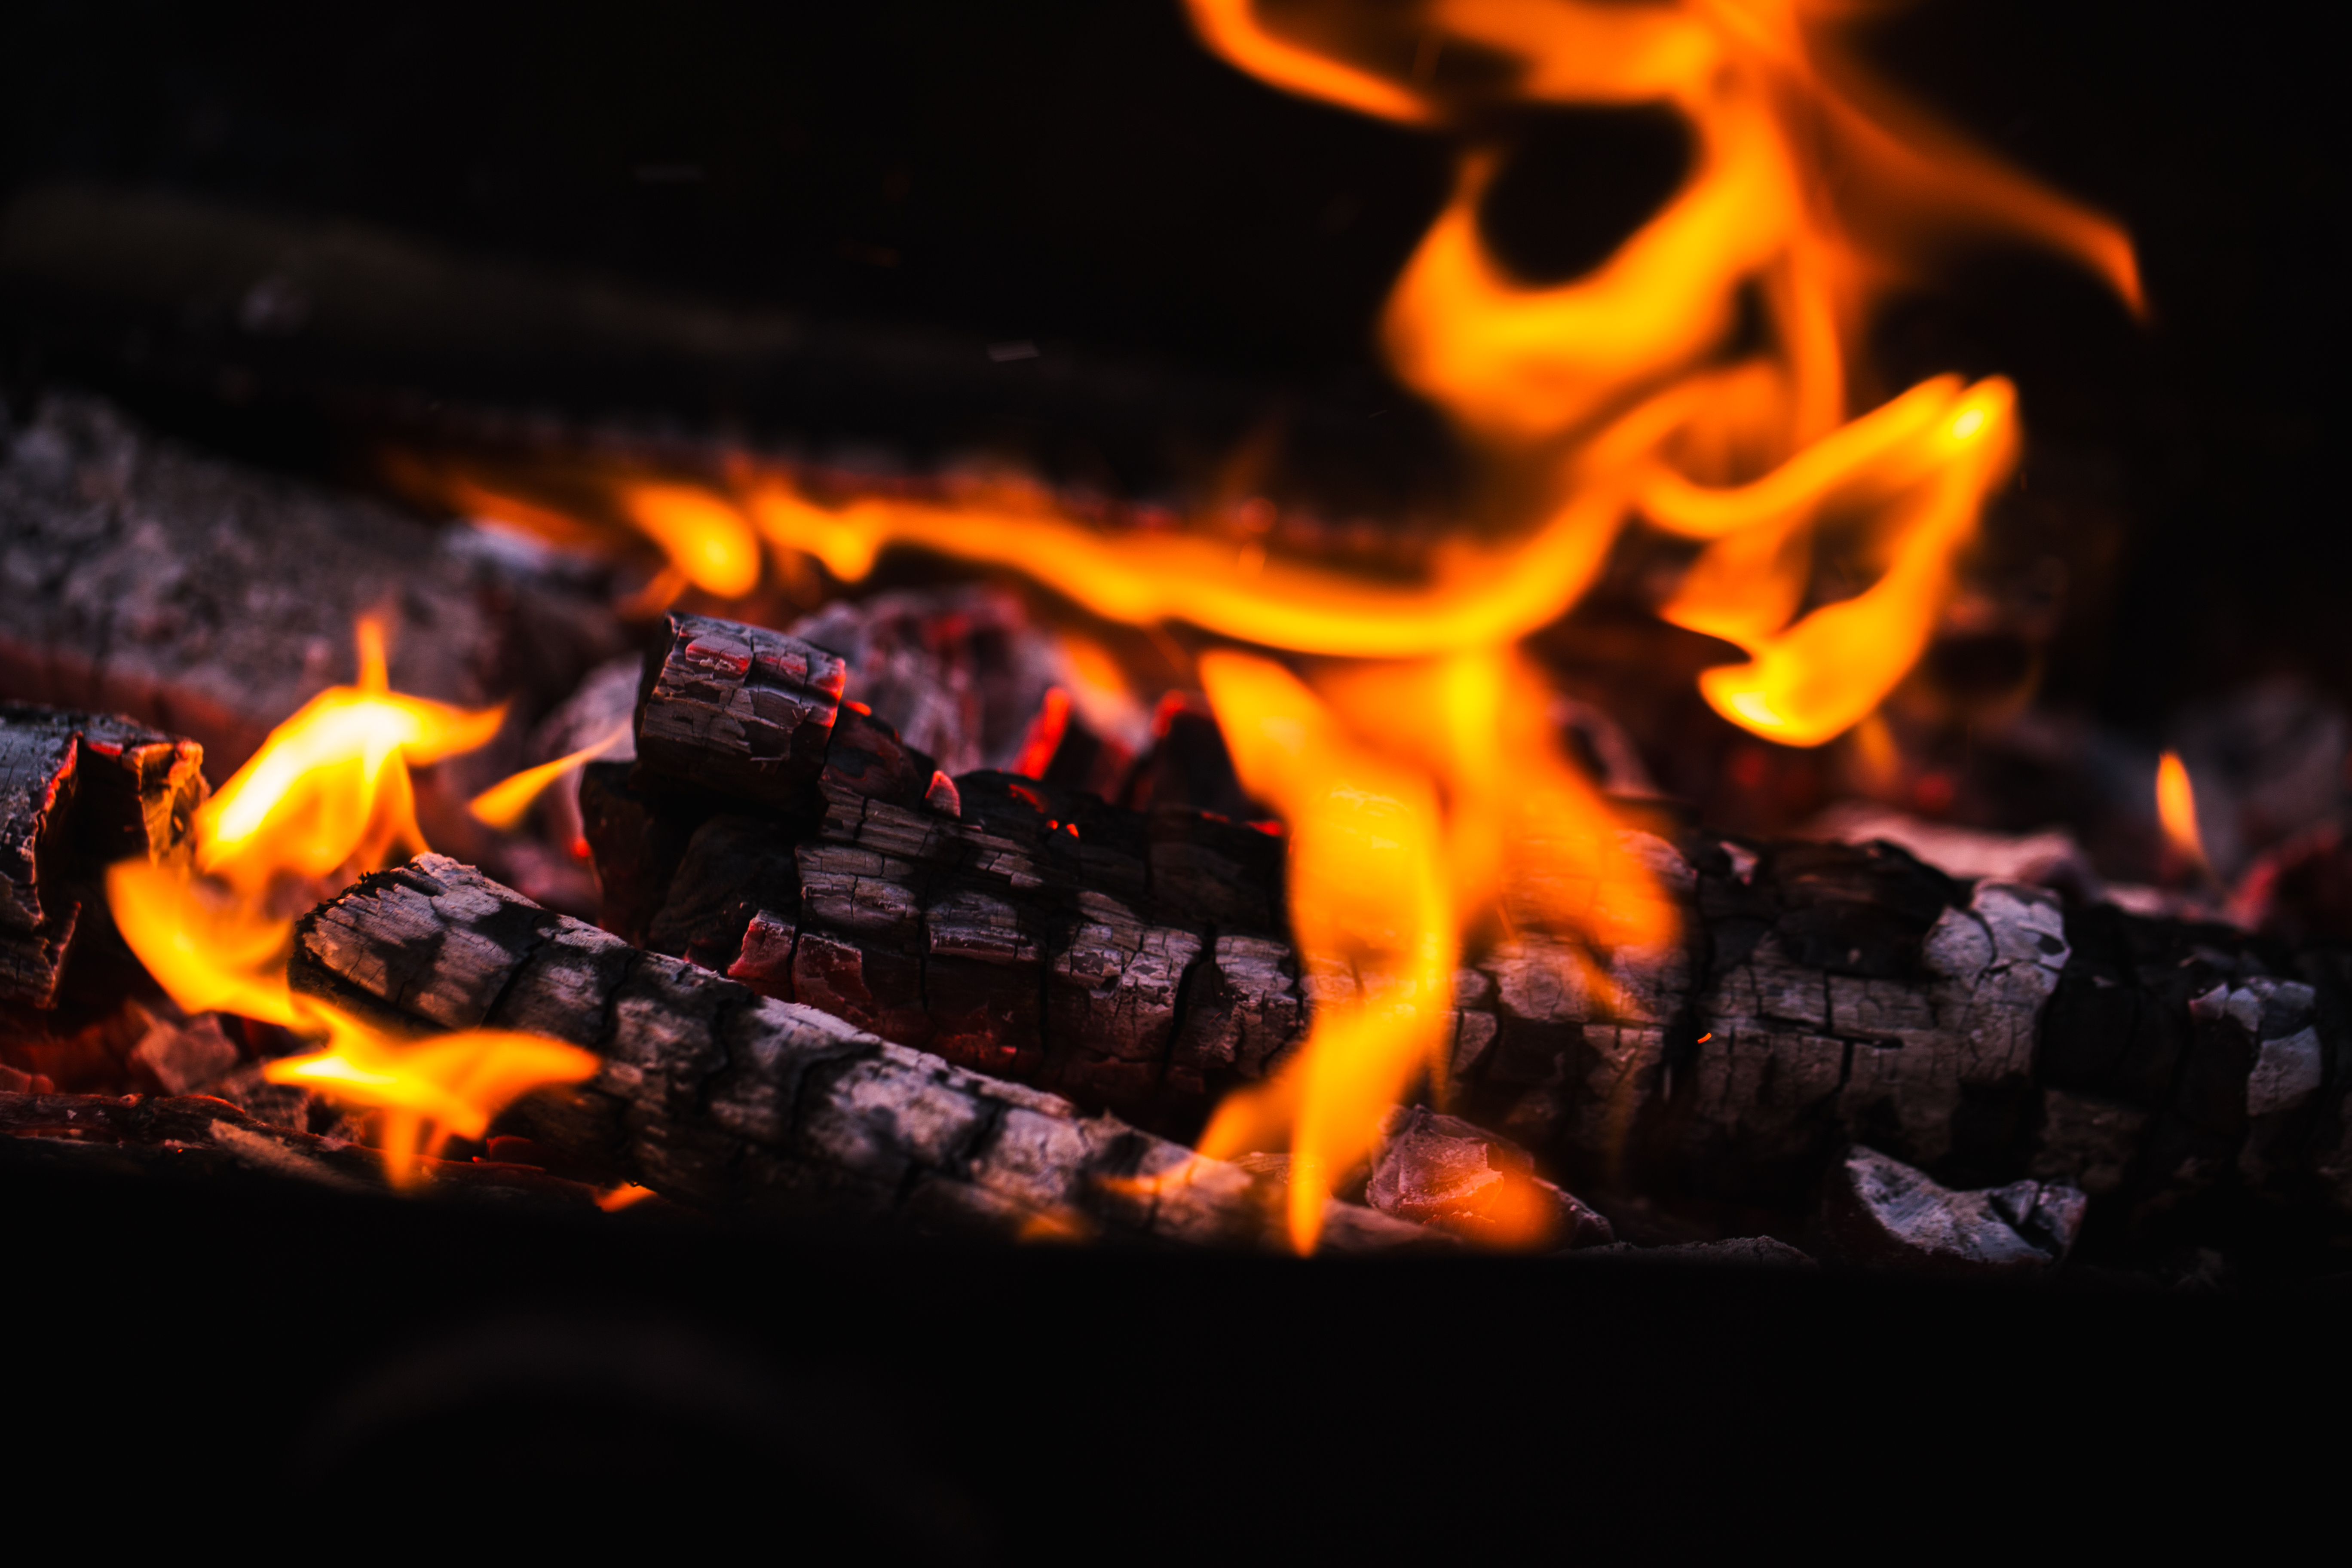 https://watt.co.uk/wp-content/uploads/2020/04/fire-flames-with-sparks-on-the-coals-PN2YTLP.jpg